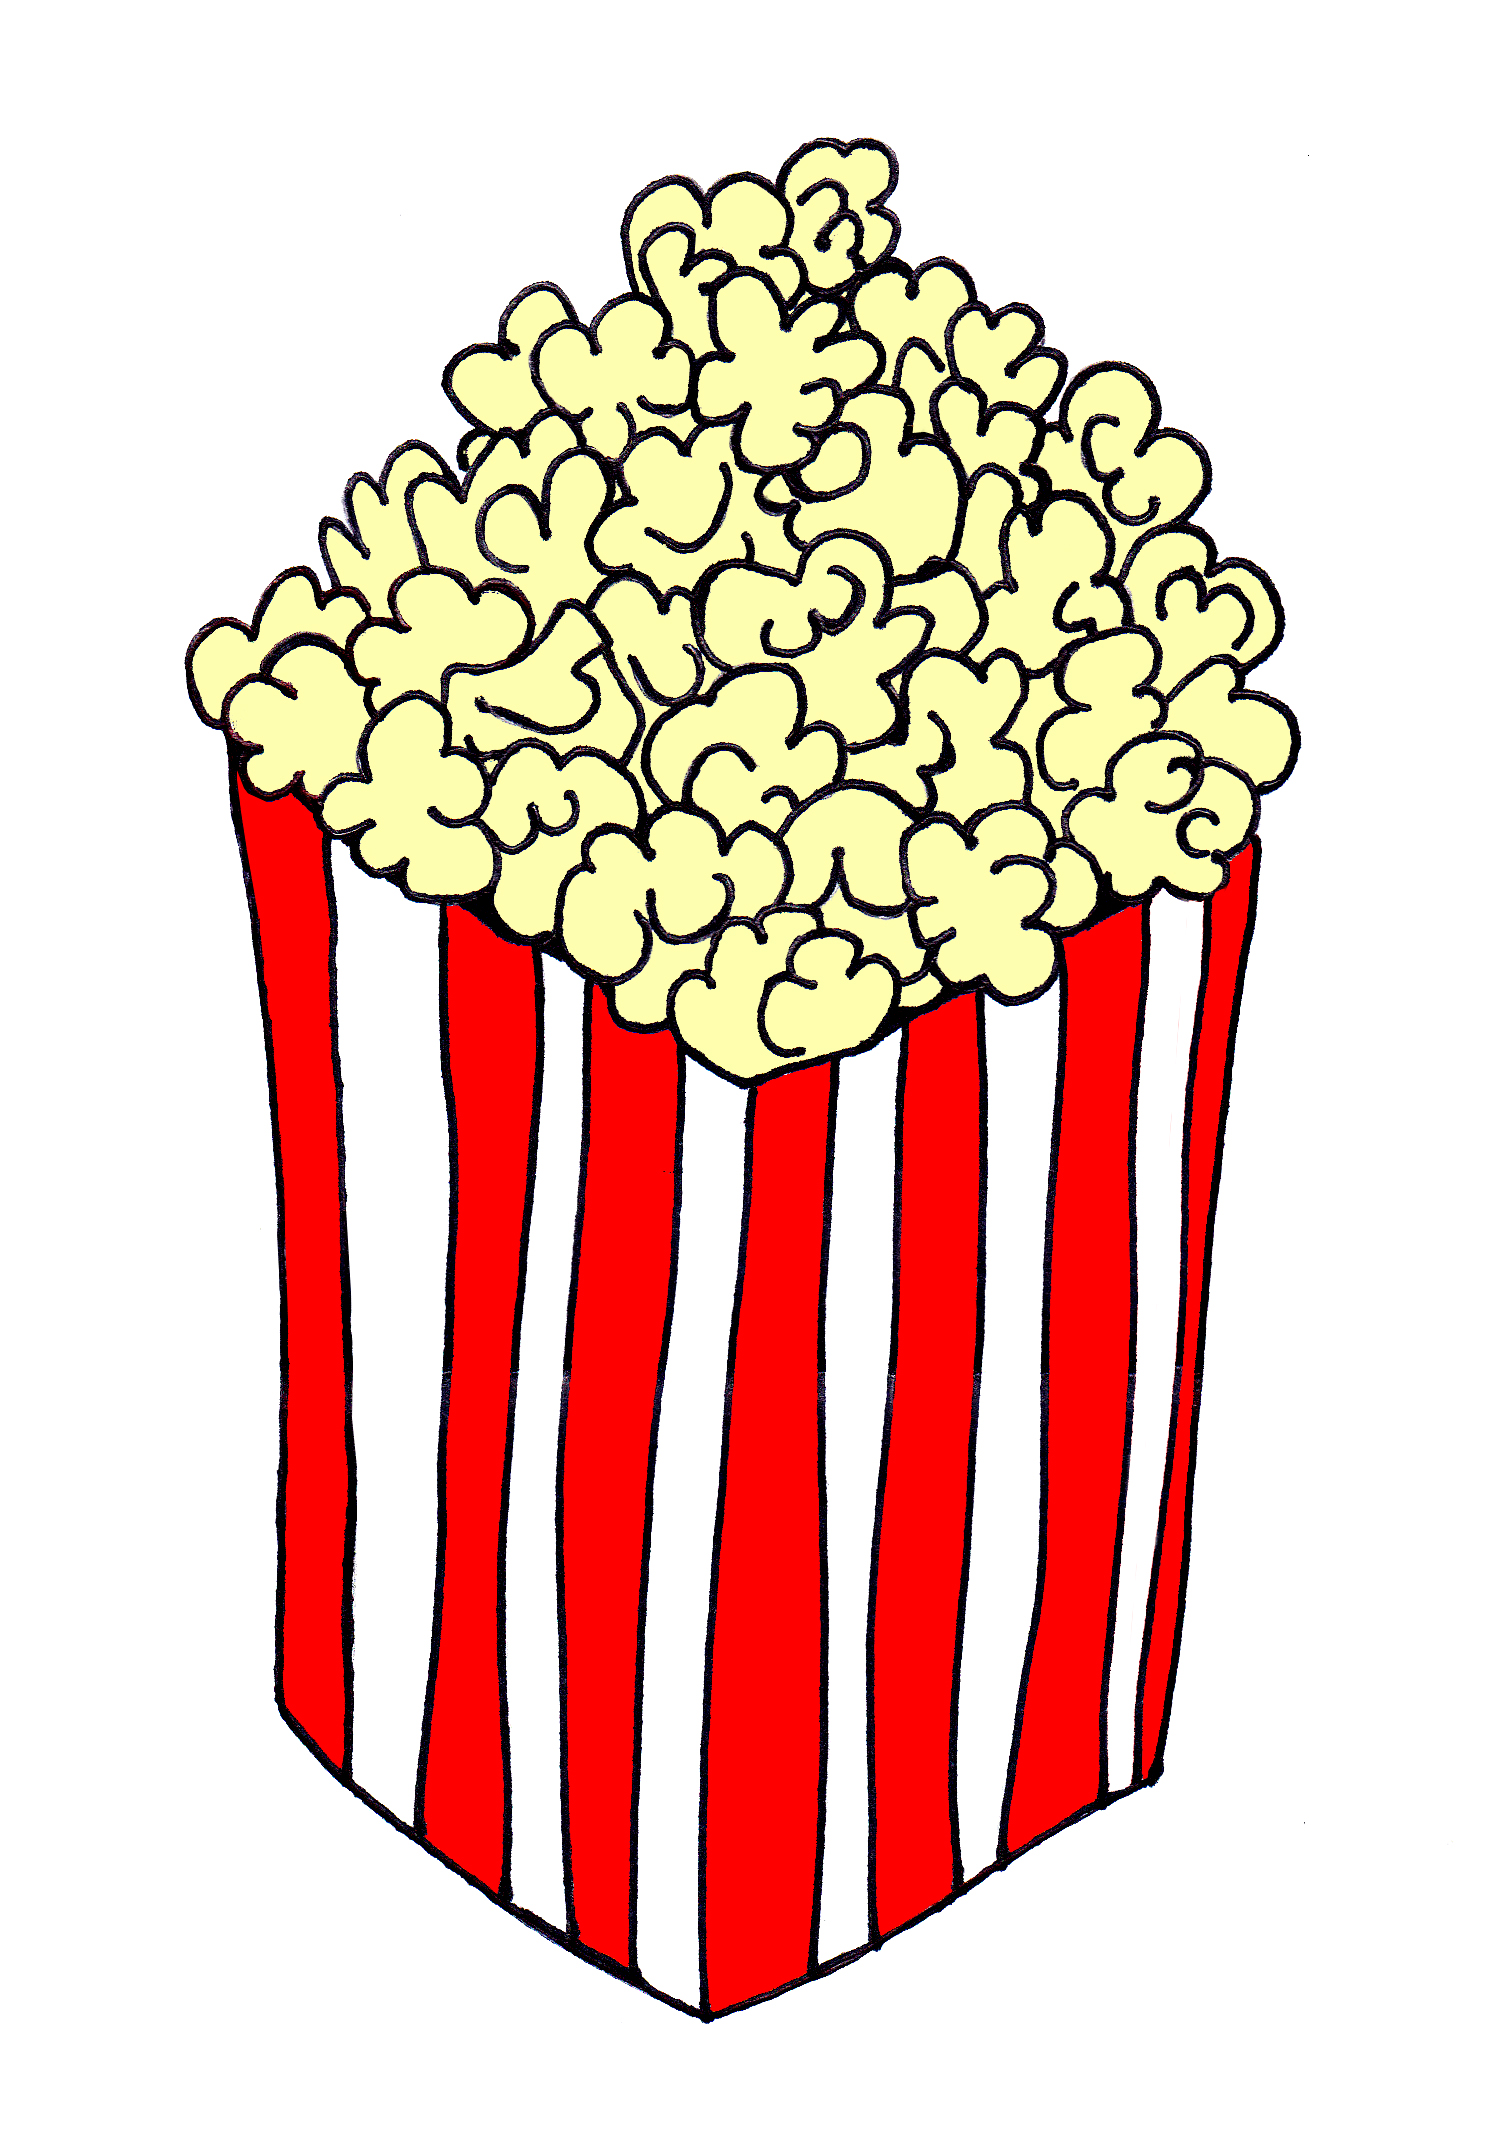 Popcorn Emoticon - ClipArt Best